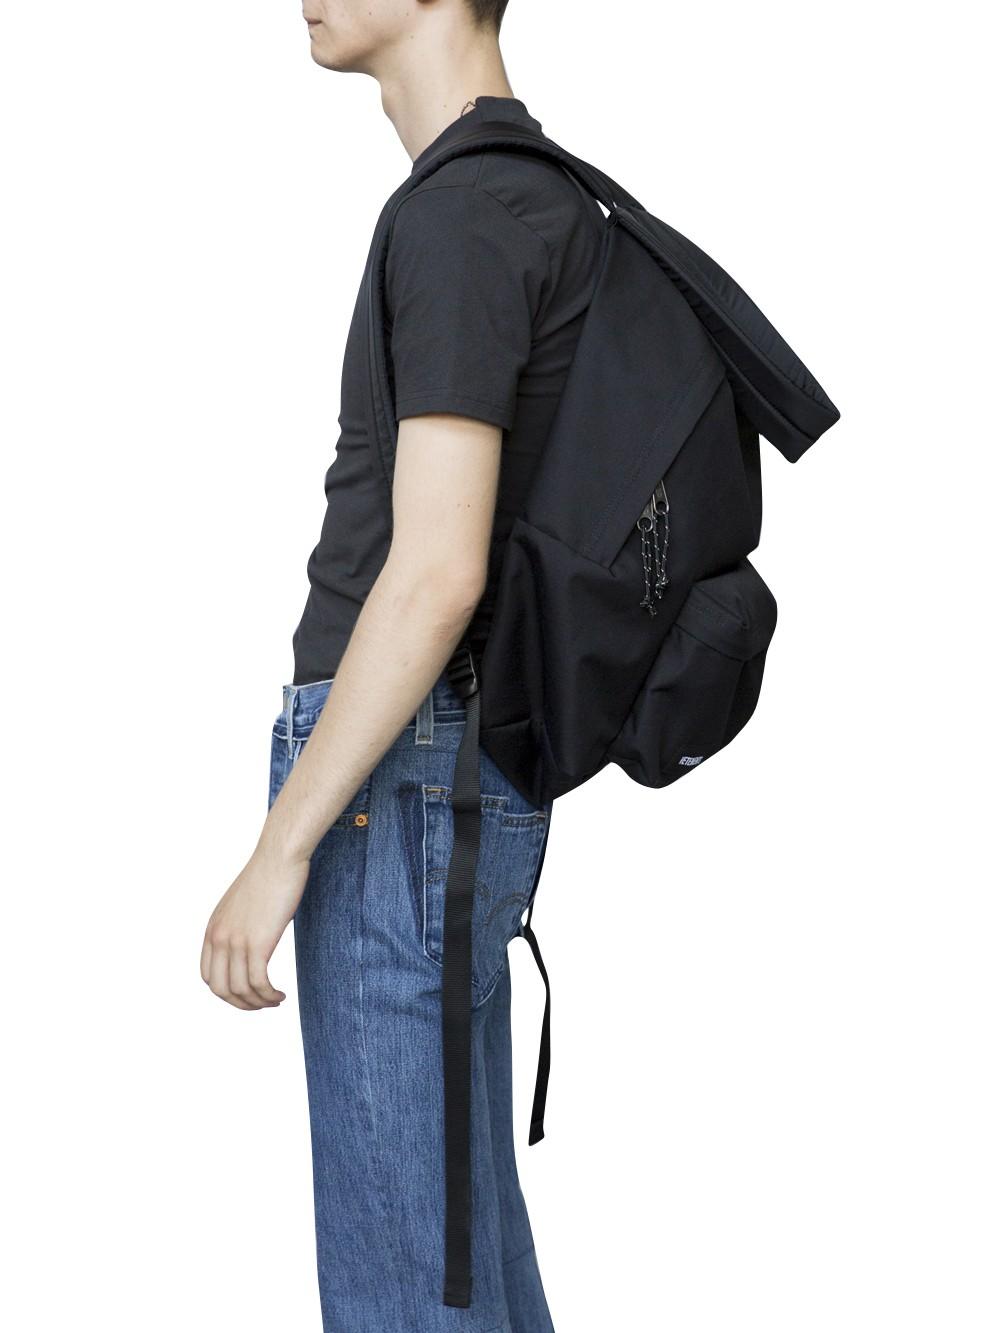 Vetements X Eastpak Backpack for Men - Lyst